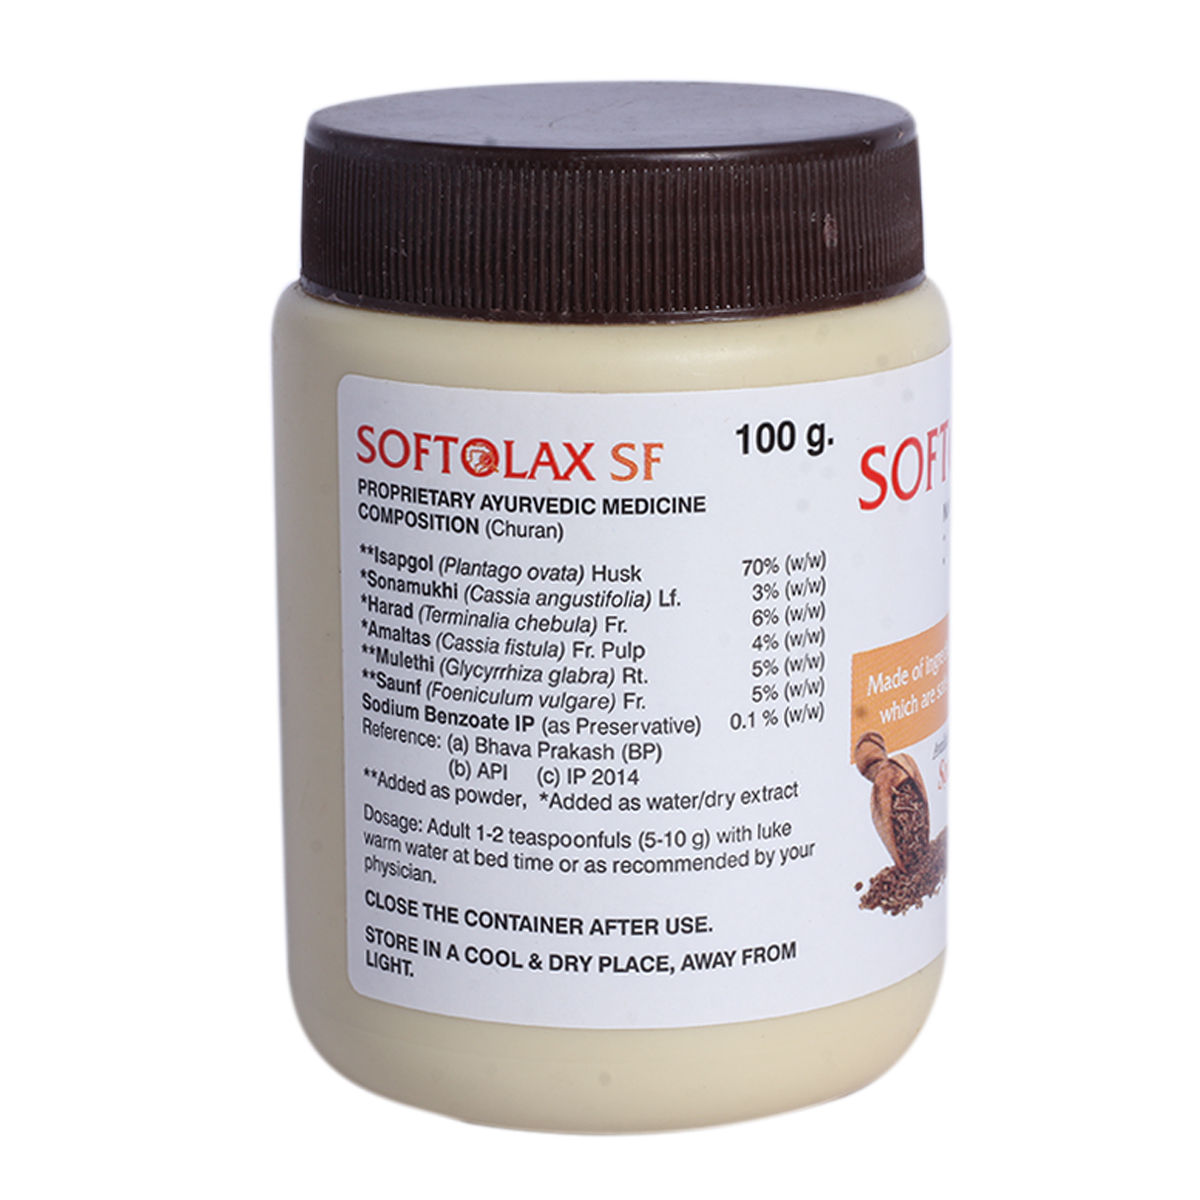 Softolax Saunf Suger Free Powder, 100 gm, Pack of 1 